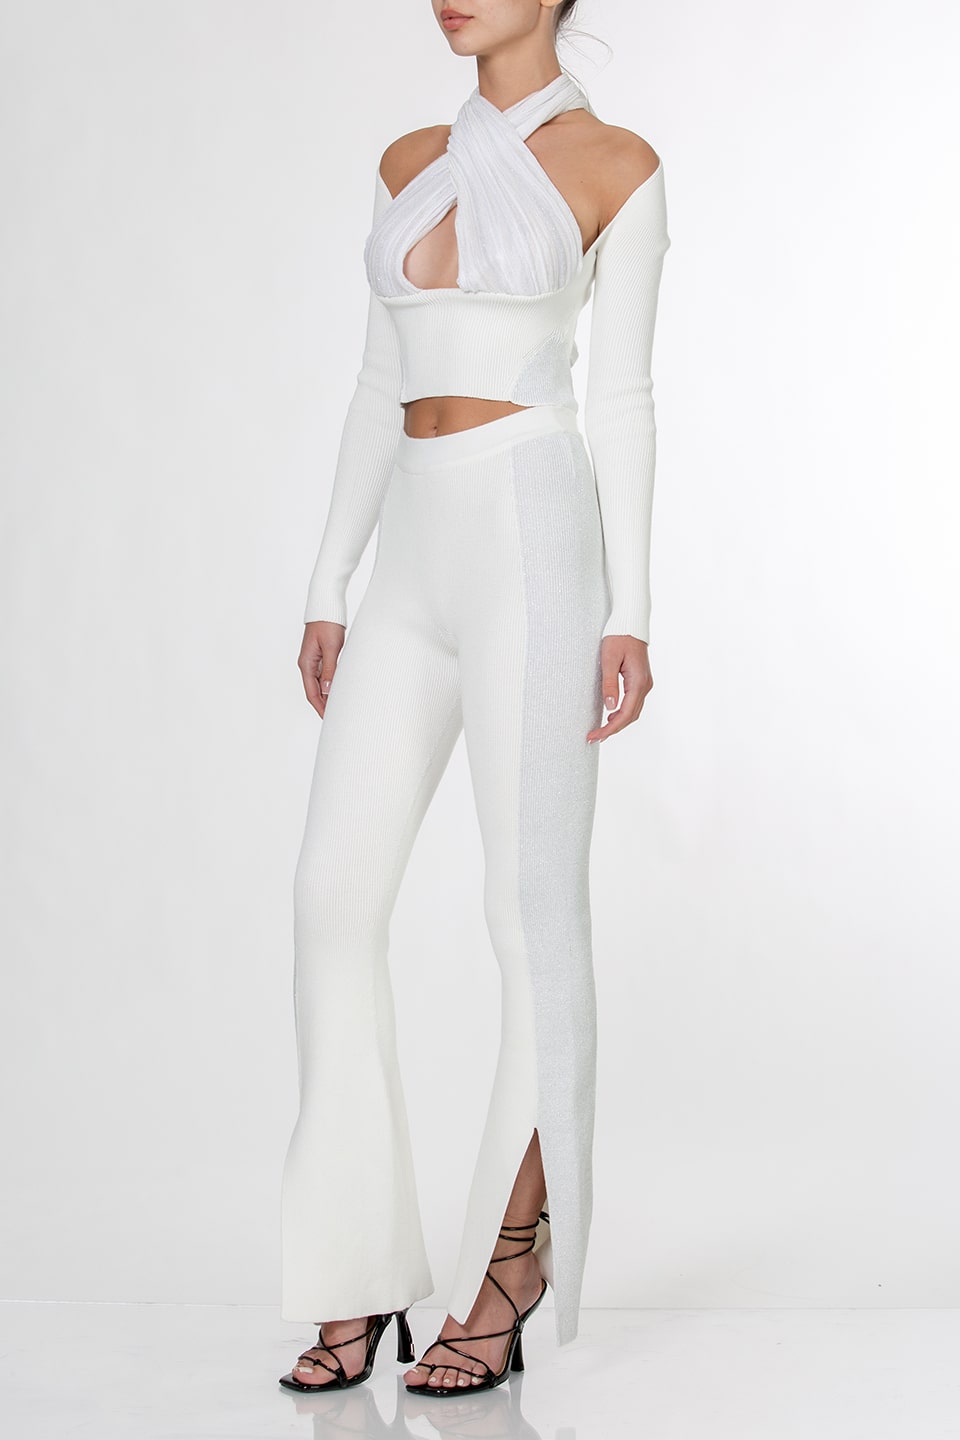 Thumbnail for Product gallery 4, kukhareva london seven pants white front side